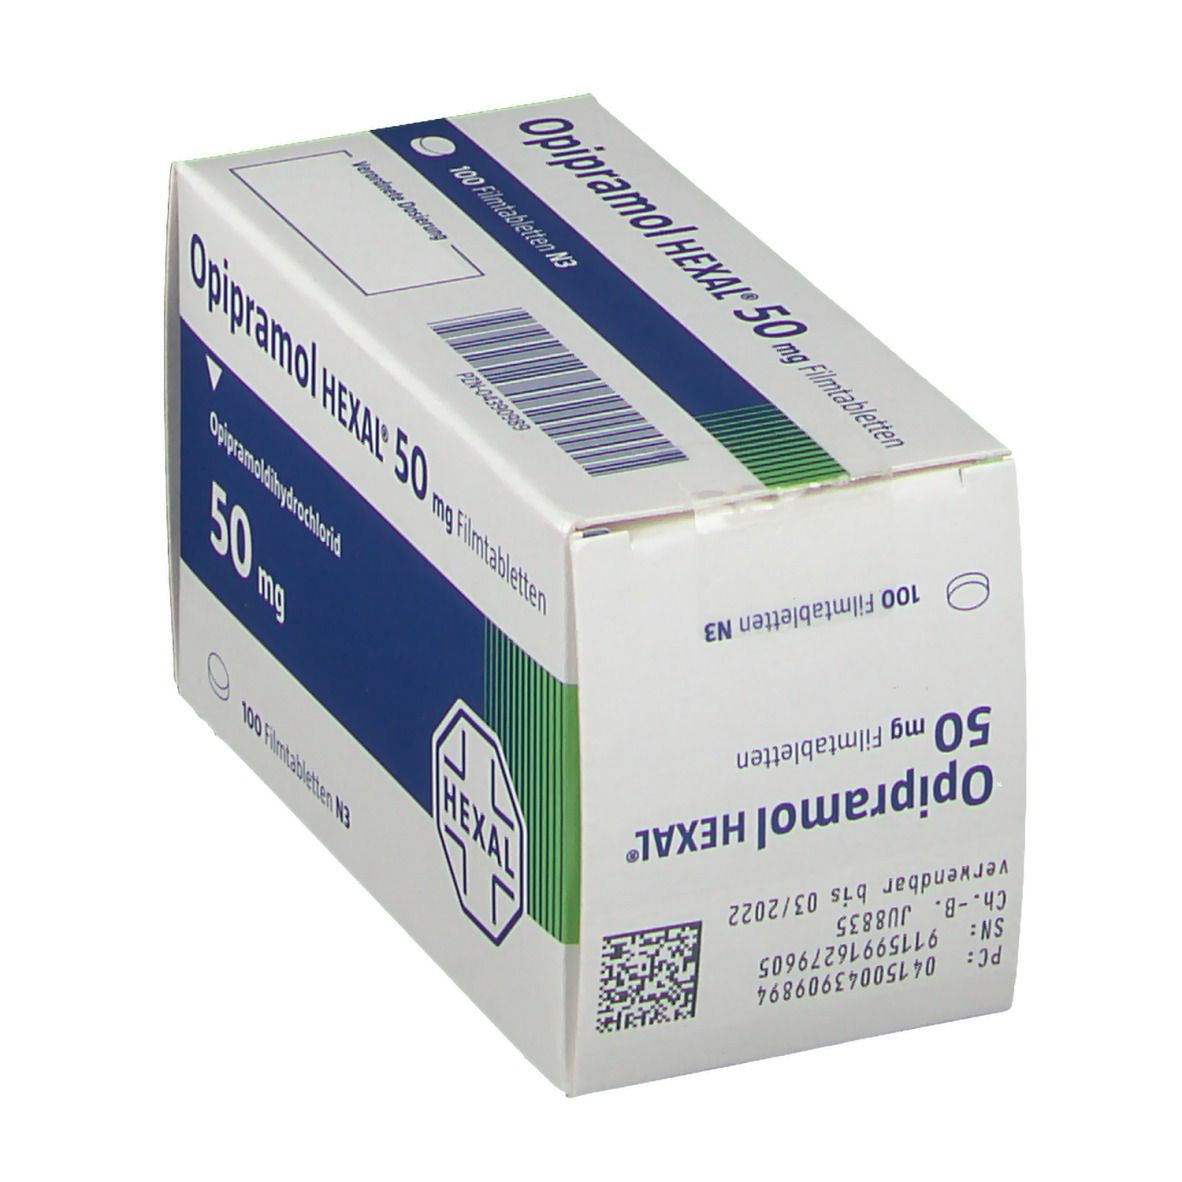 Opipramol HEXAL® 50 mg